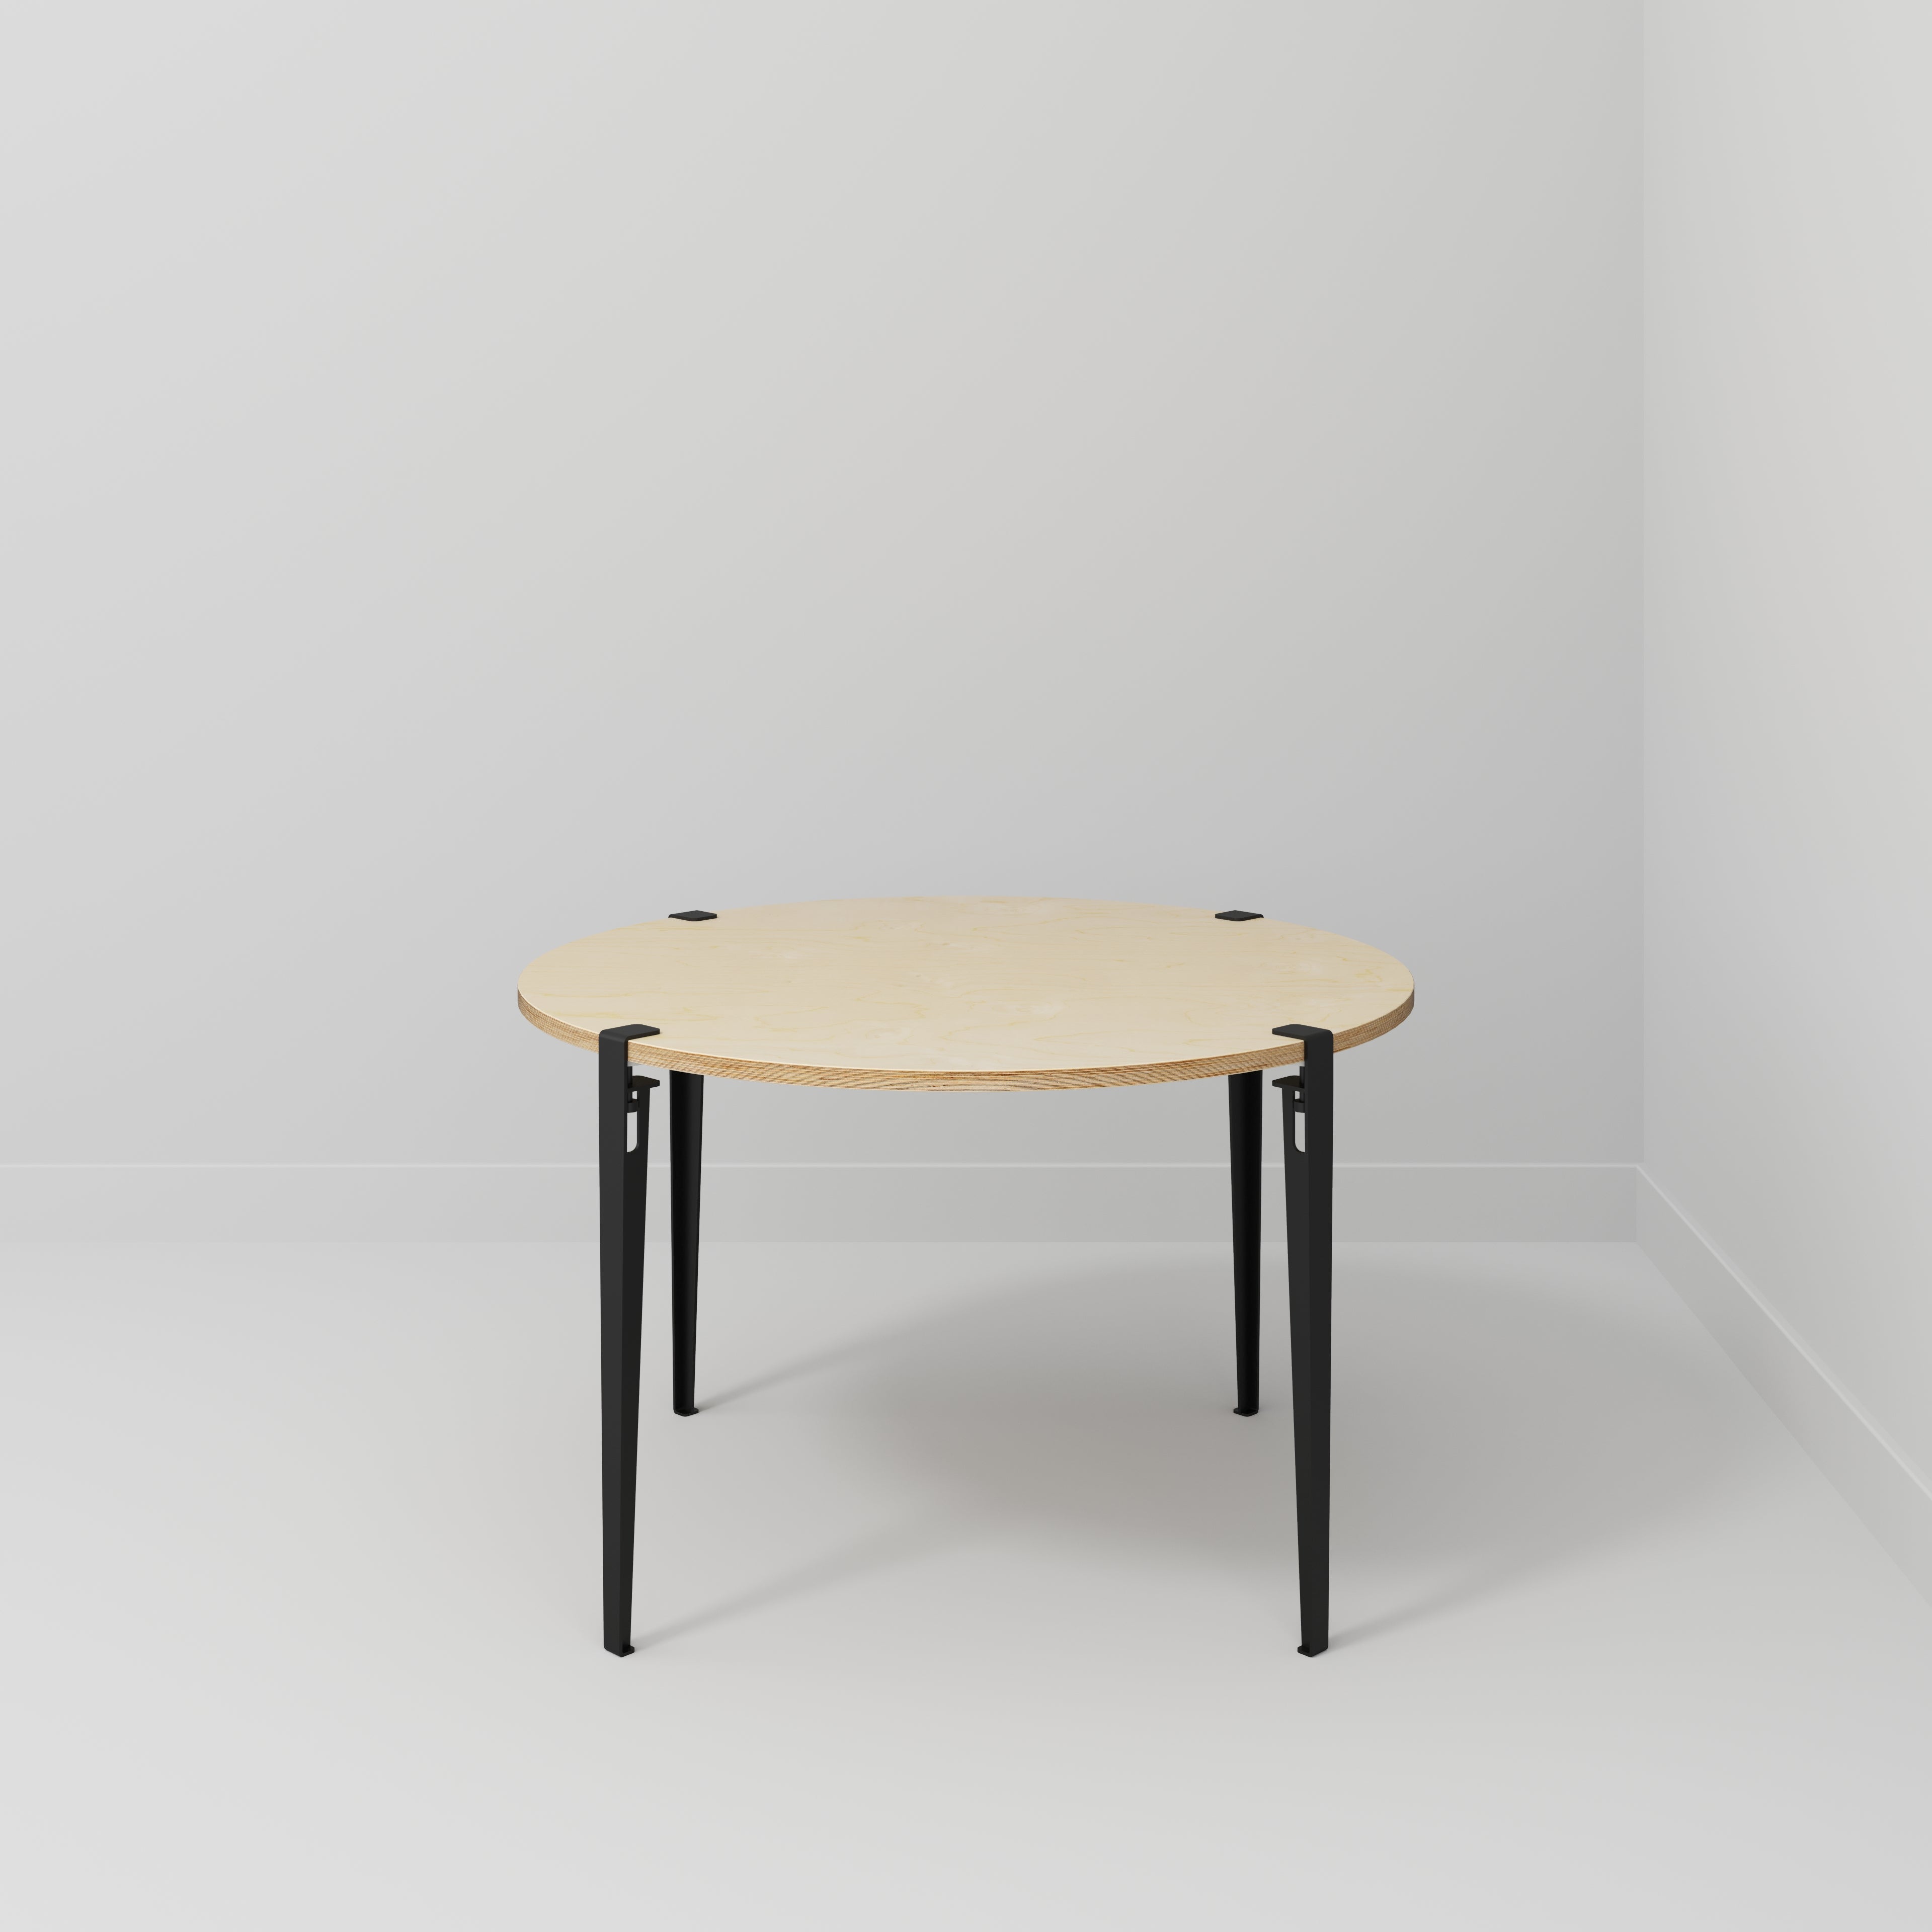 Custom Plywood Round Table with Tiptoe Legs